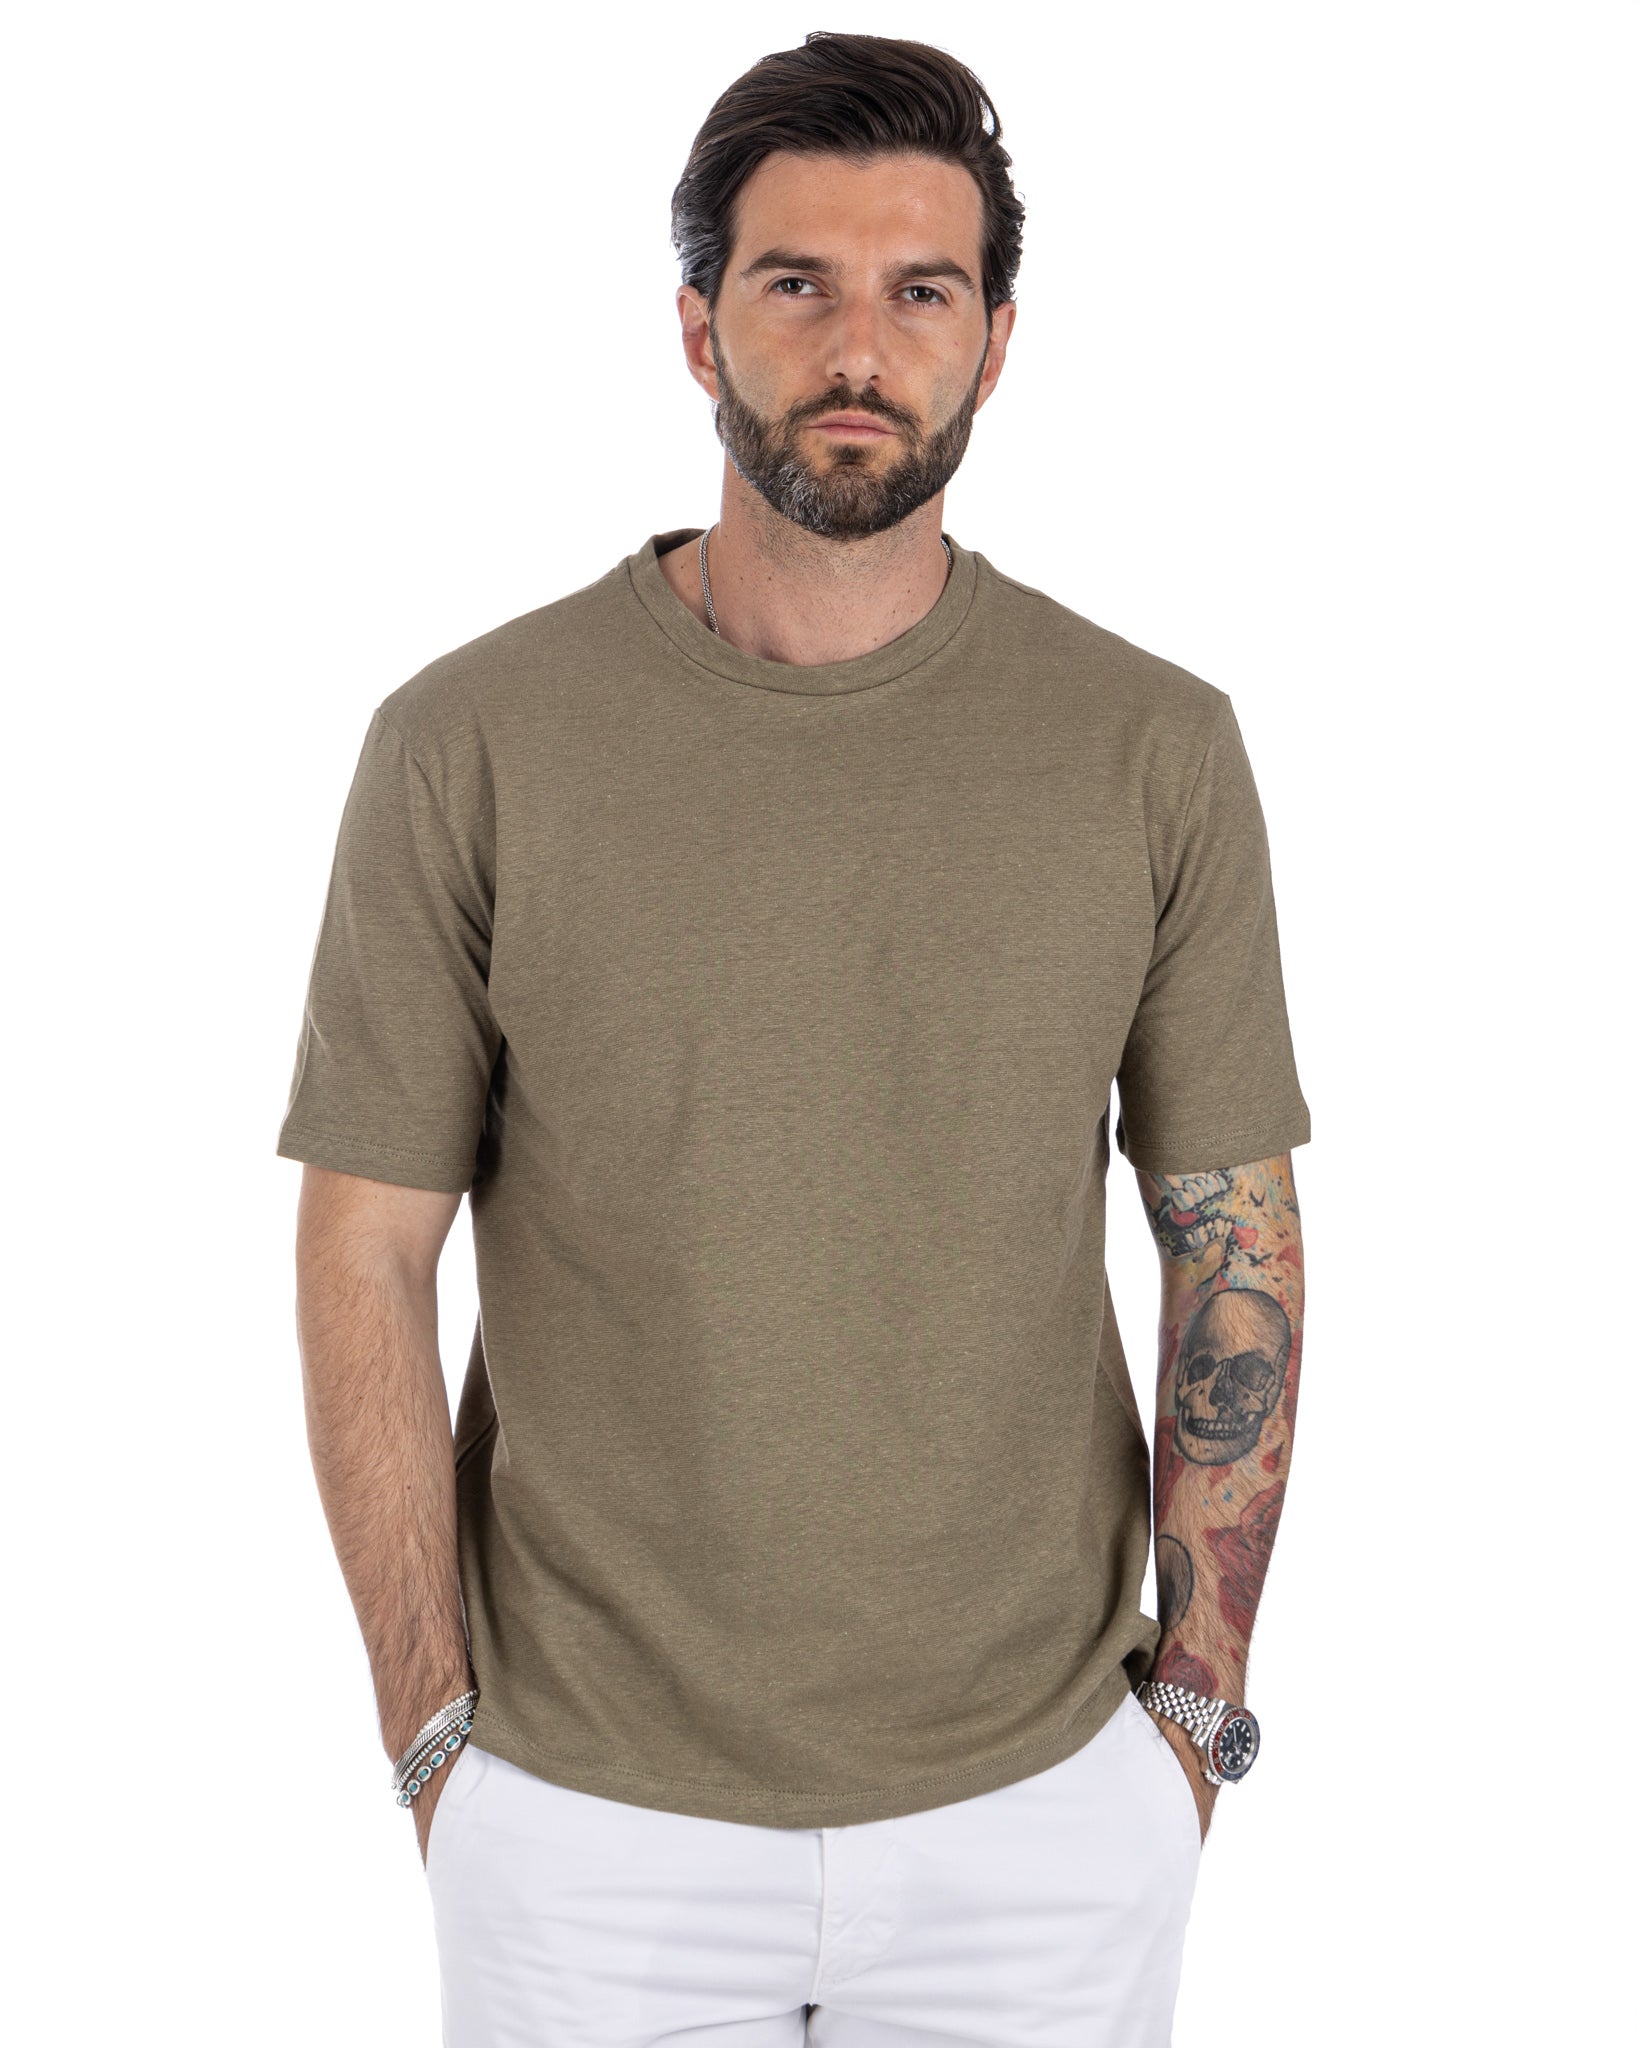 Favignana - t-shirt militaire en lin